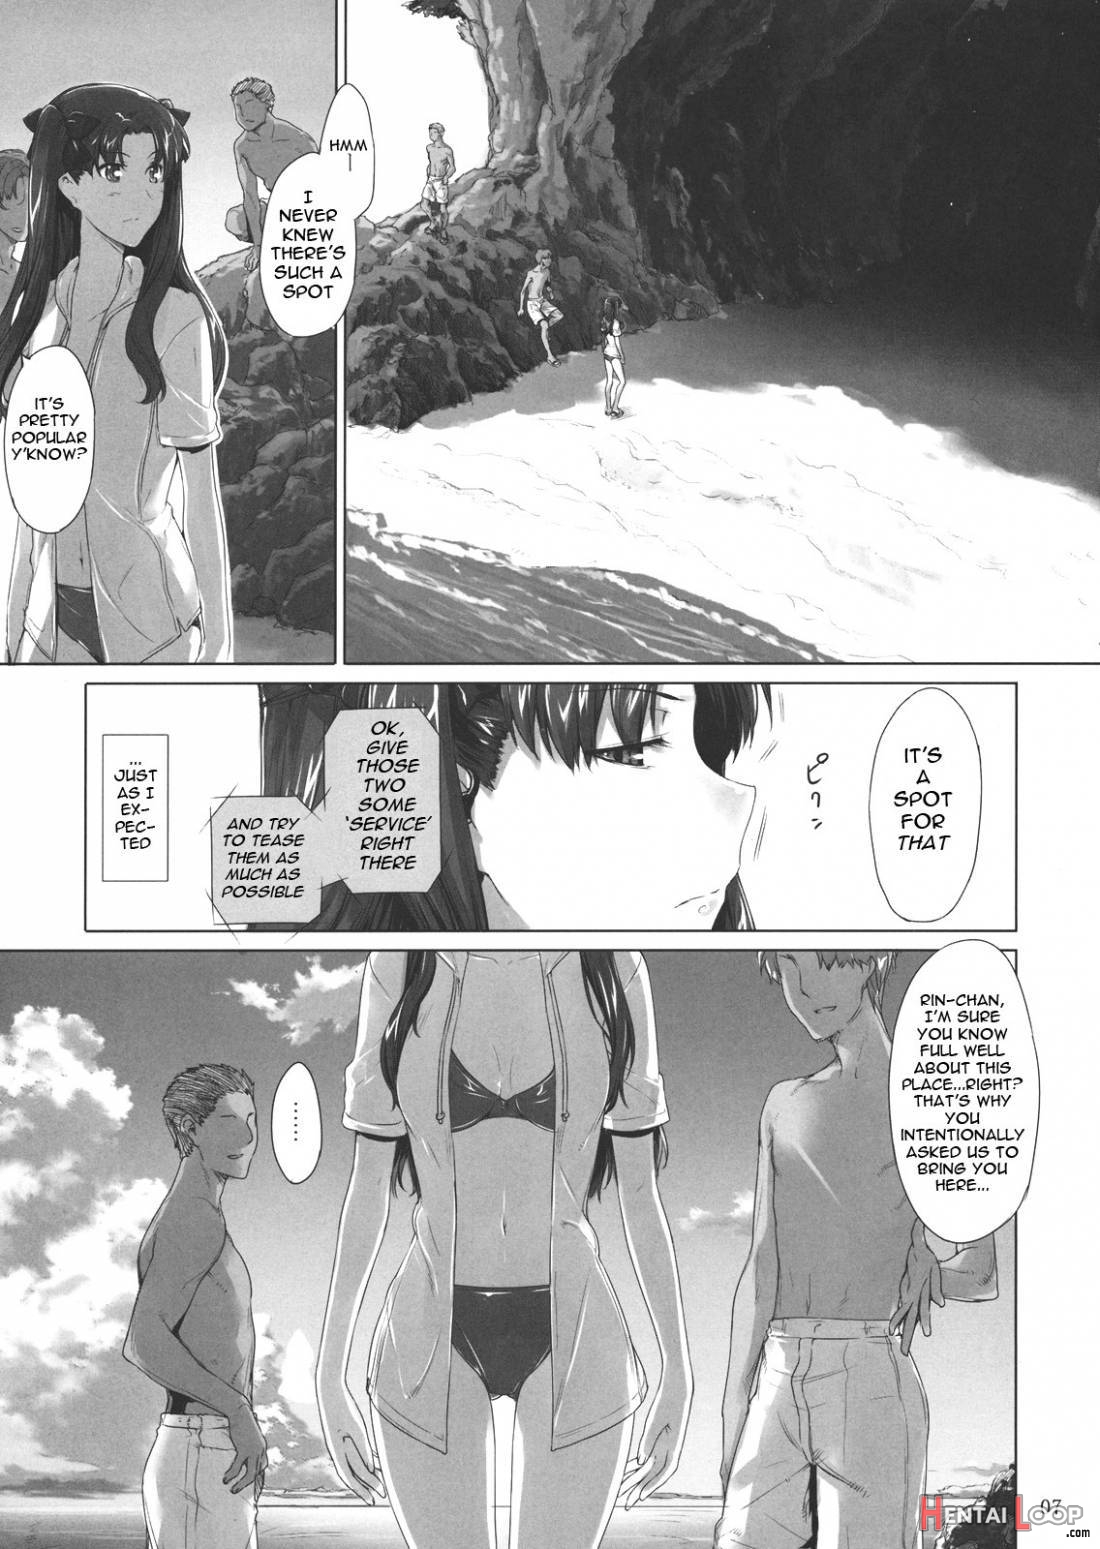 Tohsaka-ke no Kakei Jijou 7 page 6